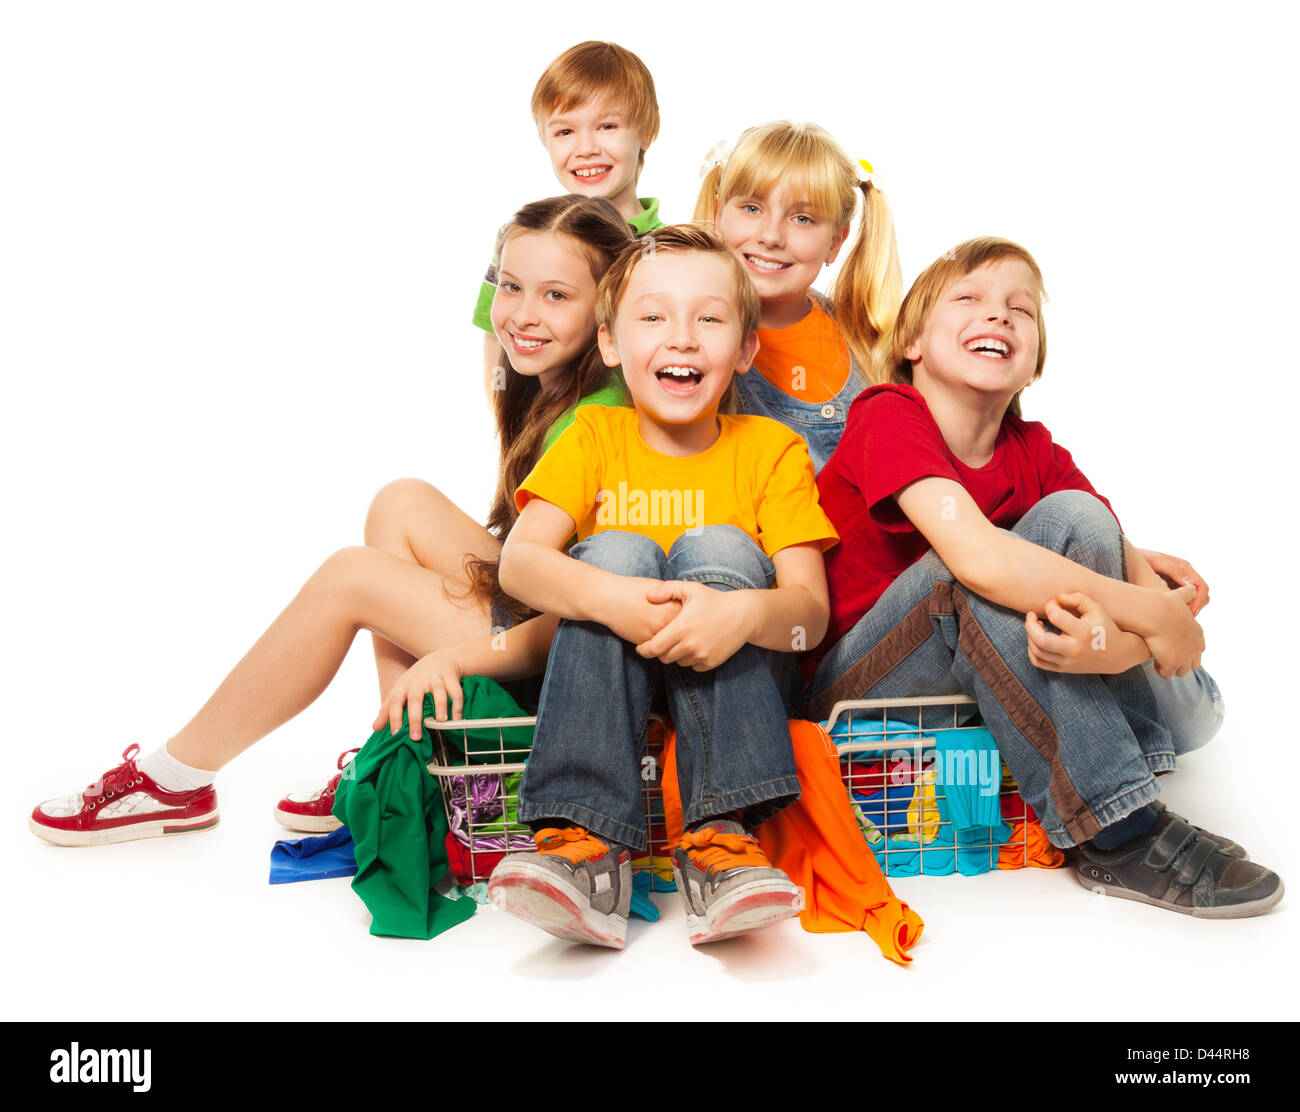 Bunch of kids having fun in clothing store Stock Photo